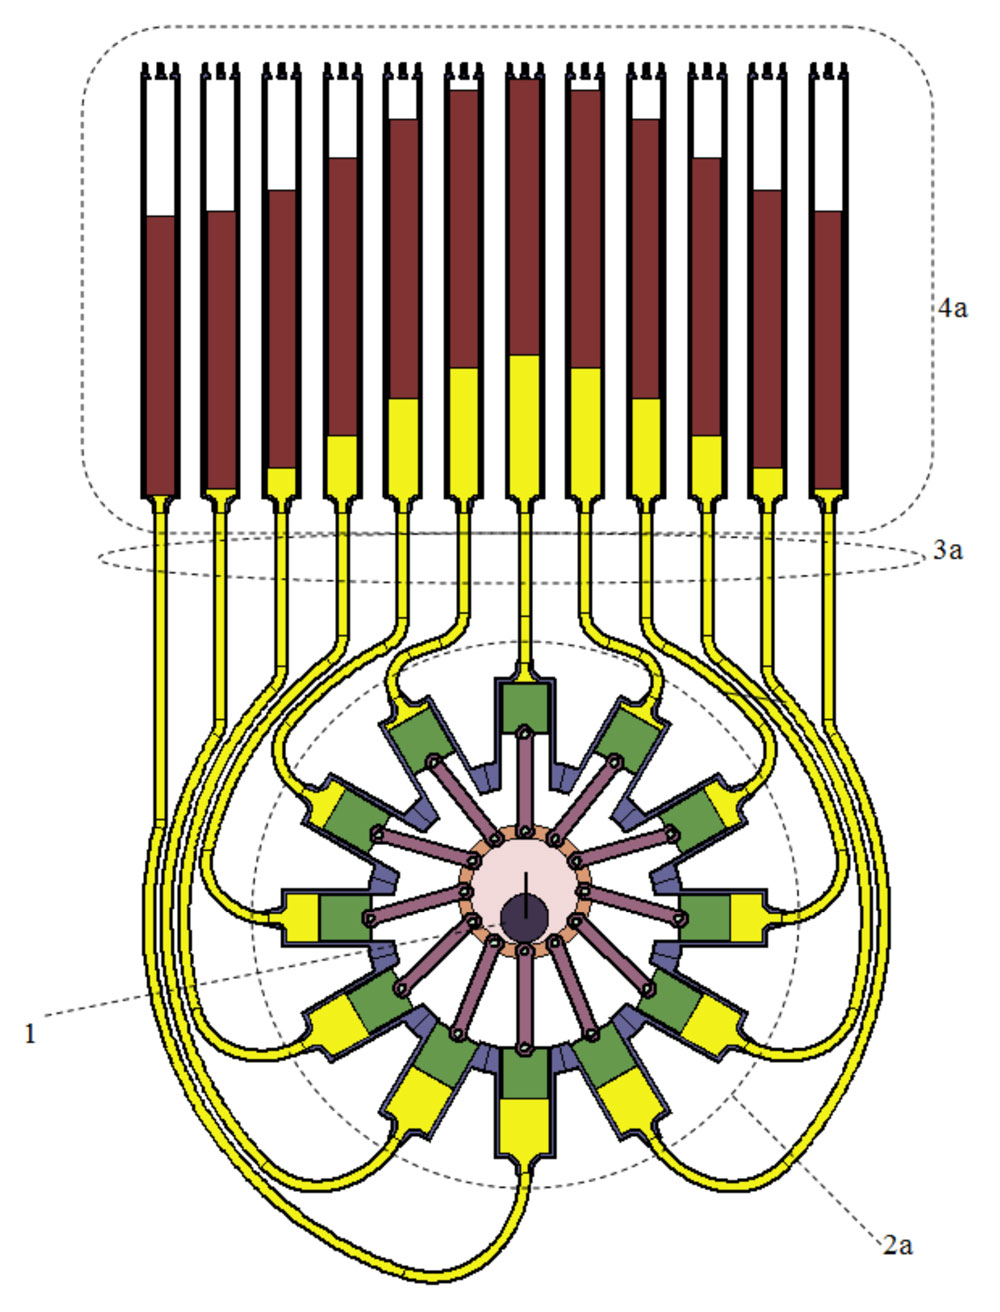 A single stage of the liquid-piston compressor/expander